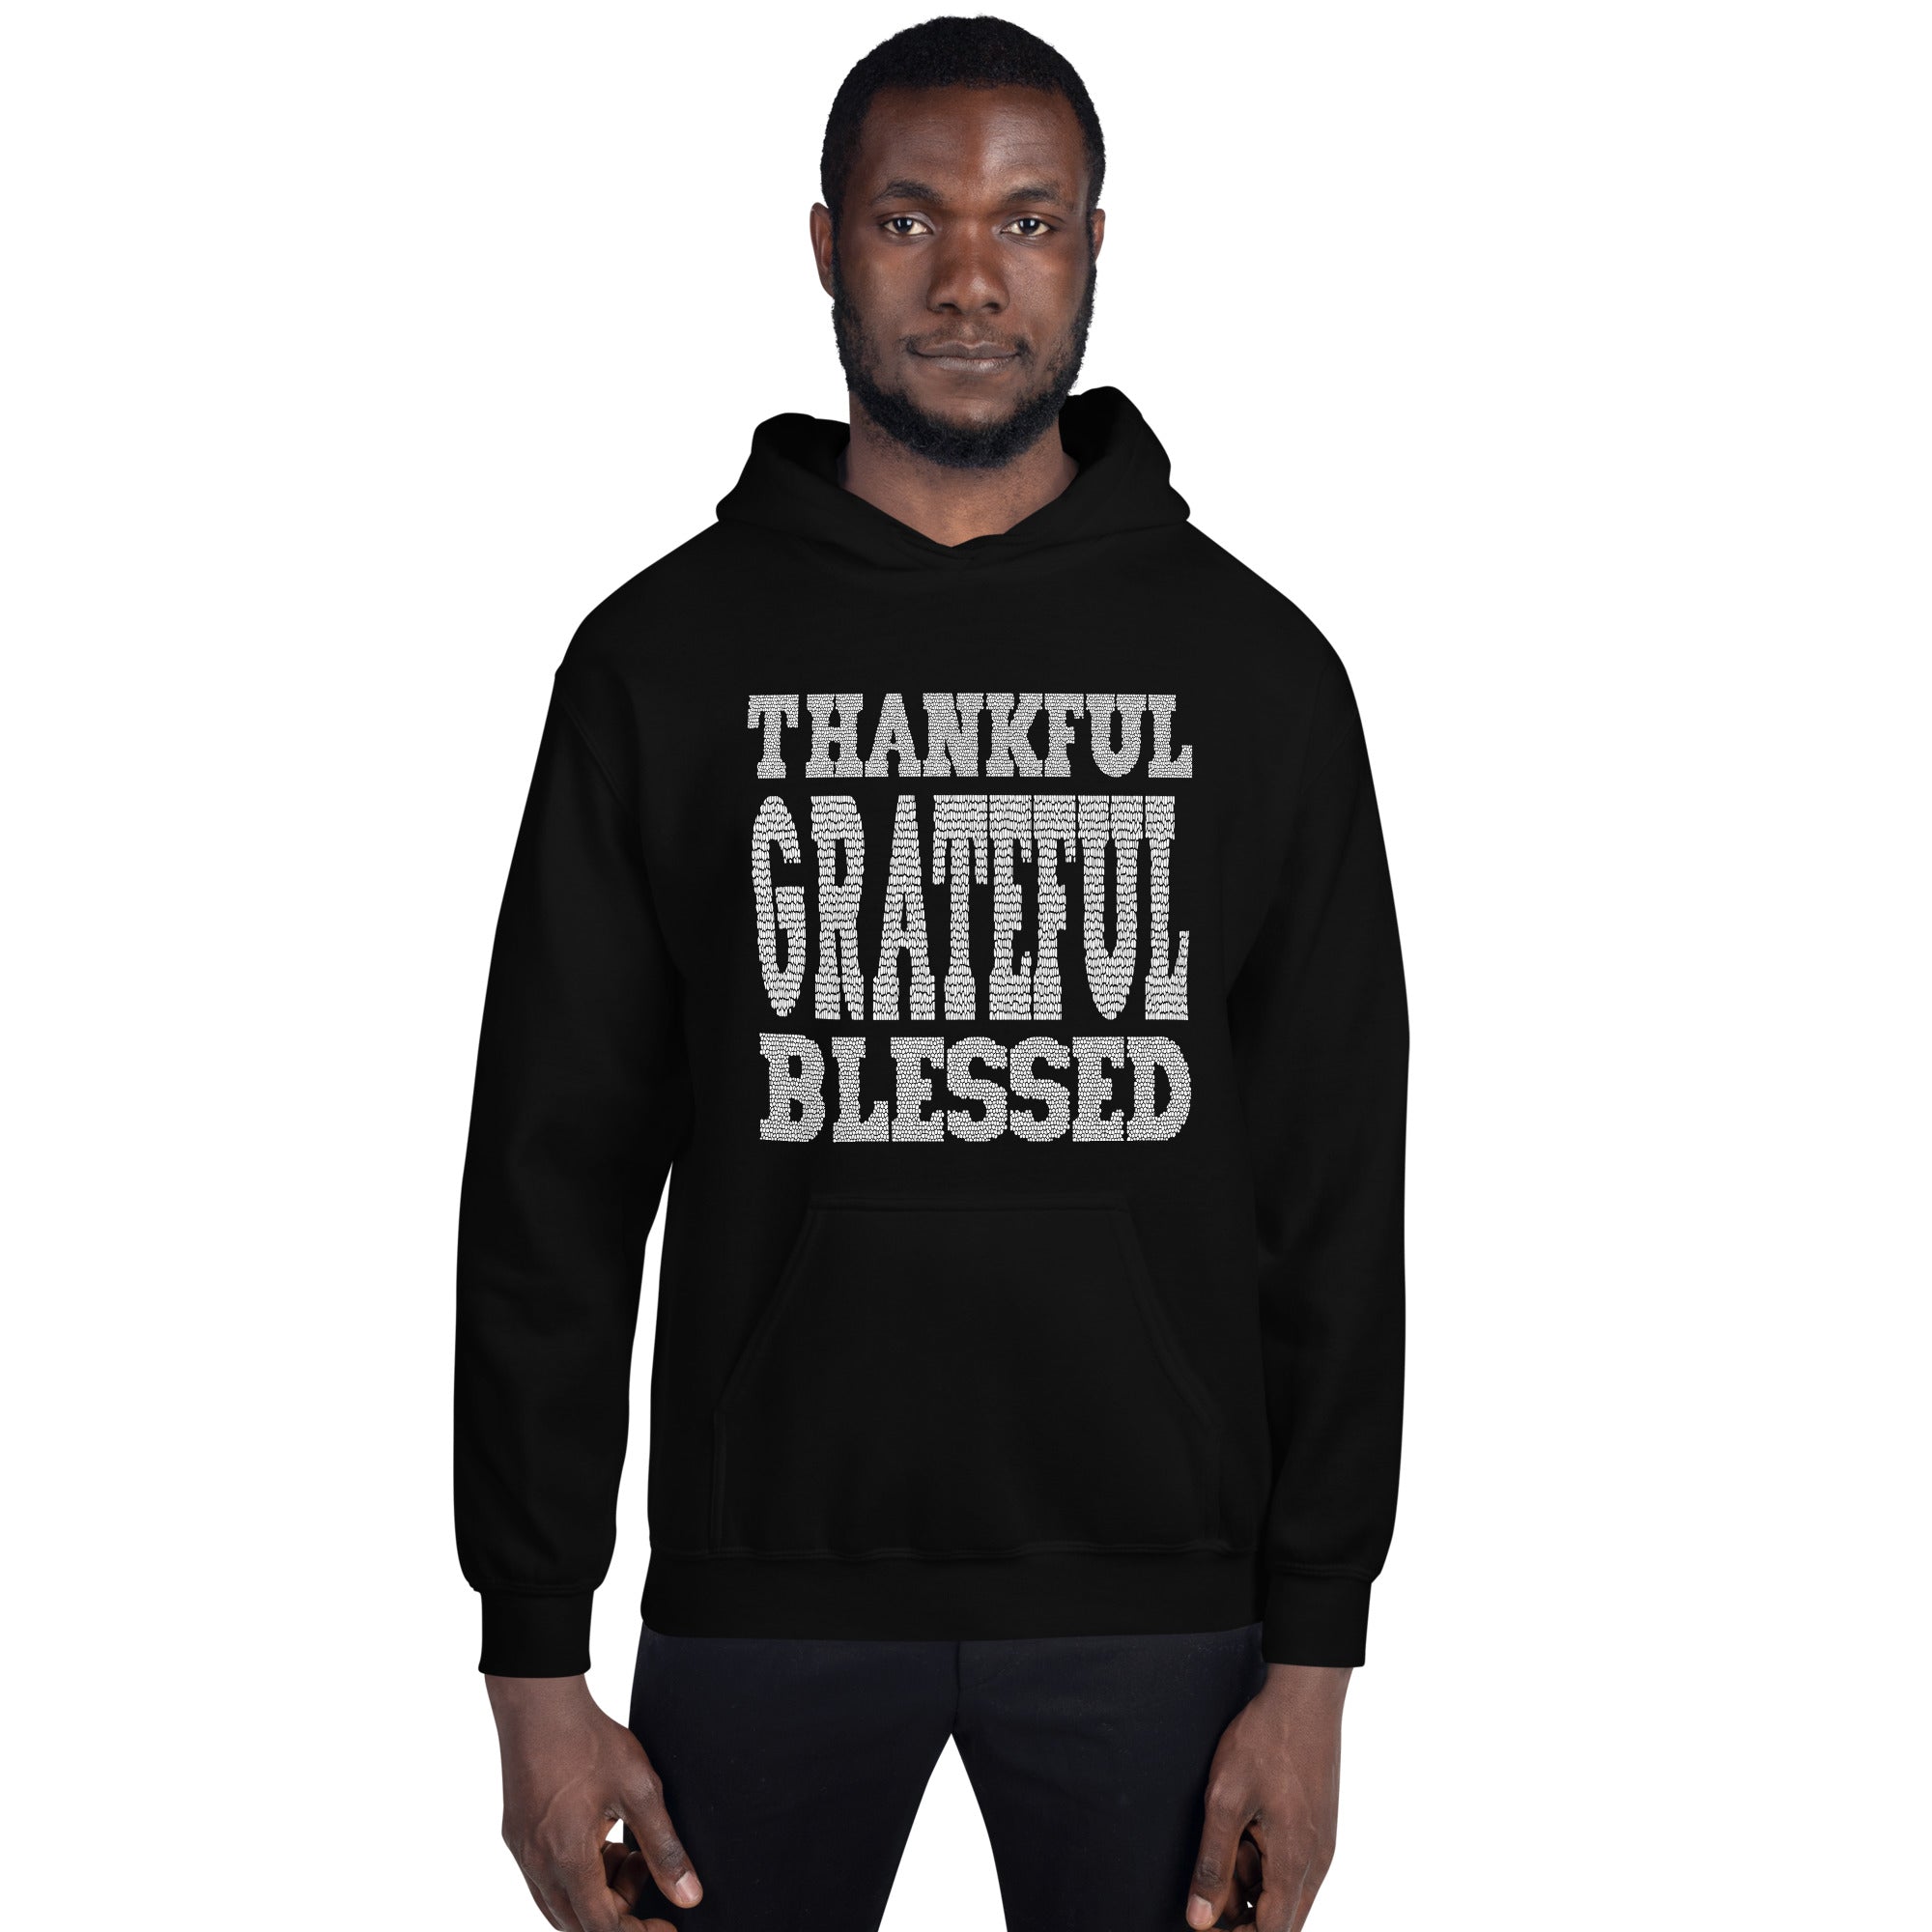 Thankful, Grateful, Blessed - Unisex Hoodie